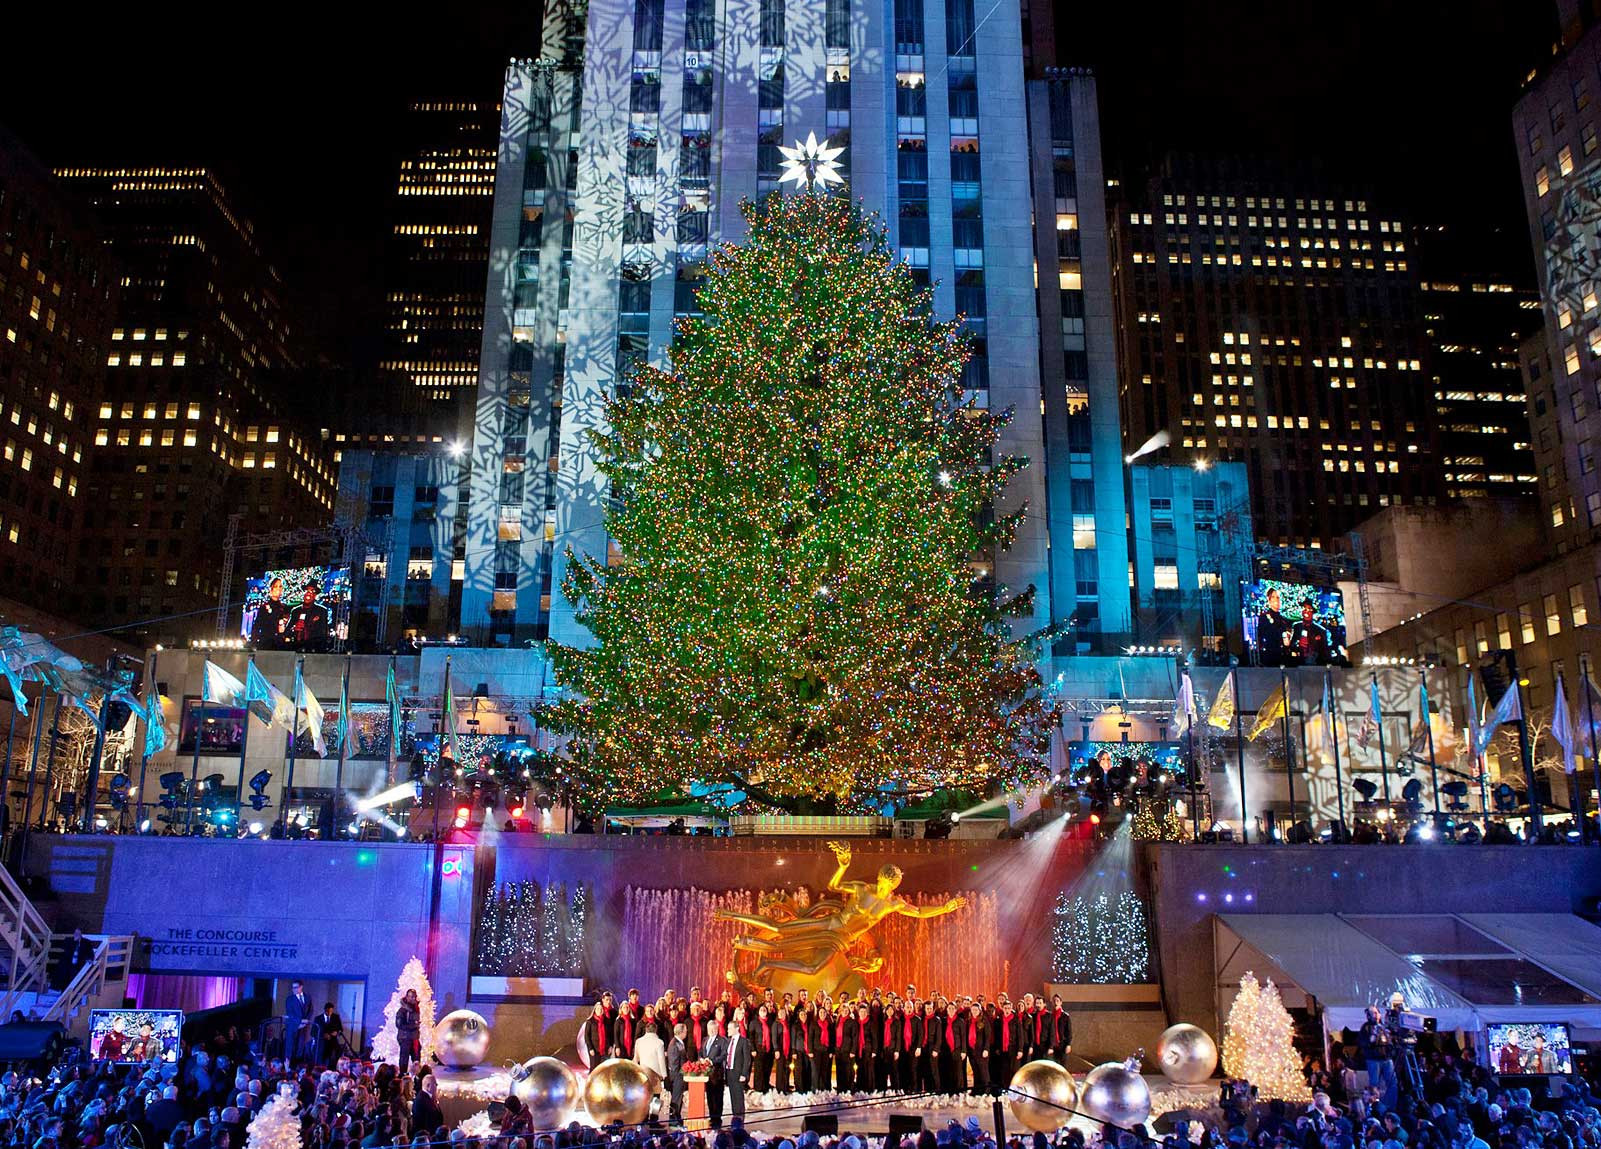 Rockefeller Christmas Tree Lighting 2019
 Christmas in New York 2019 Rockefeller Center Christmas Tree